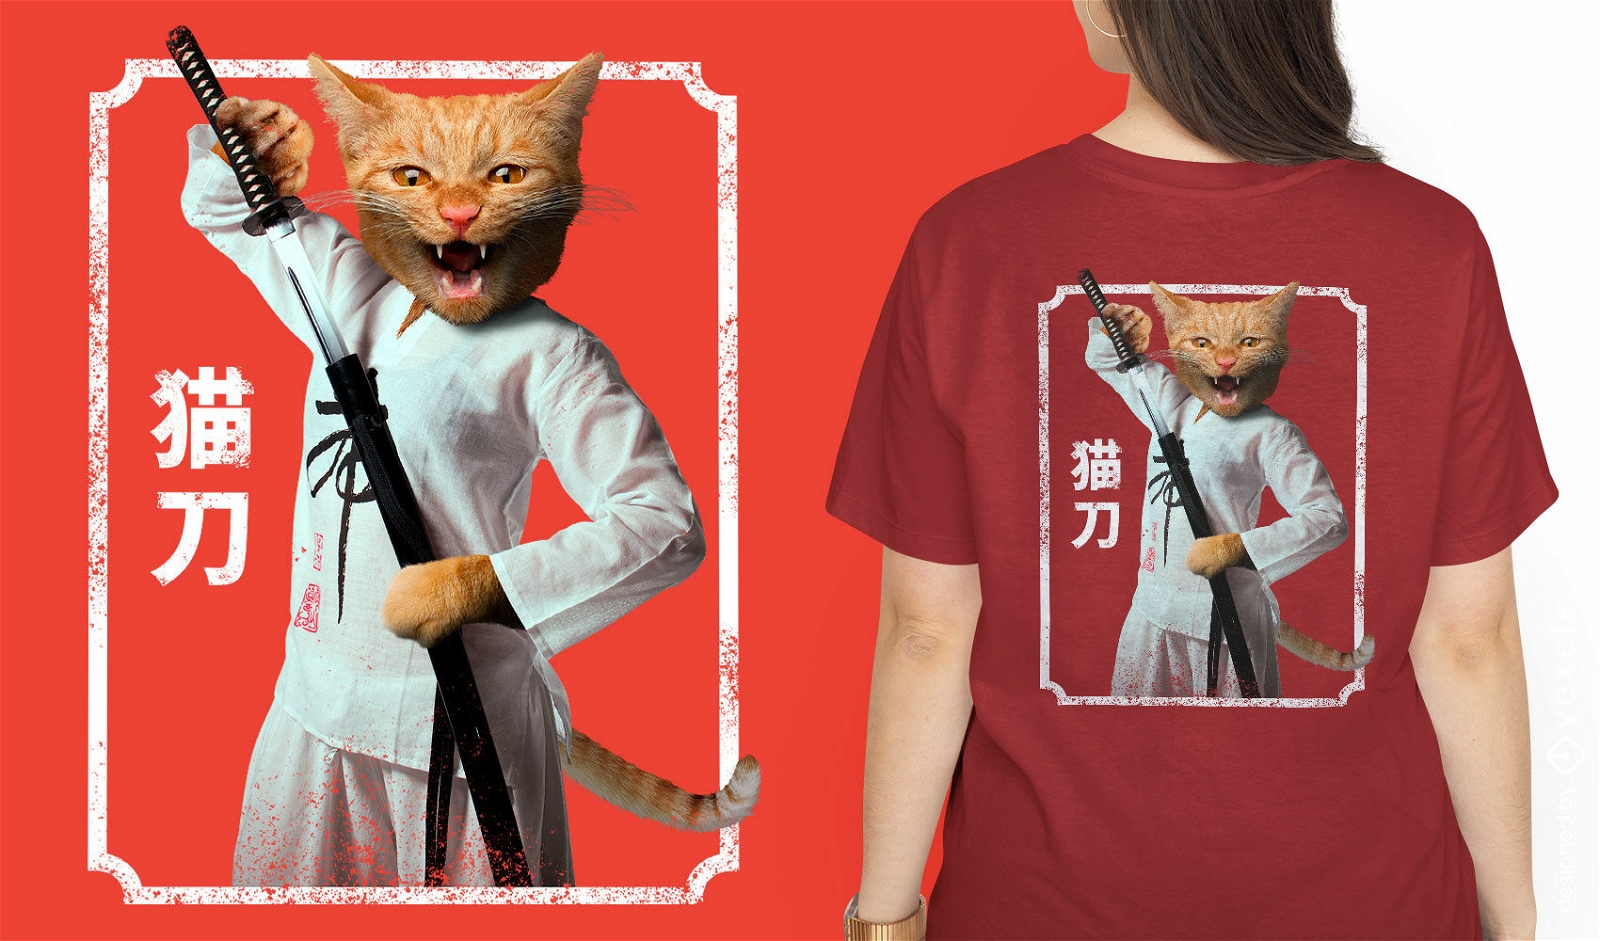 Ninja cat with sword t-shirt design